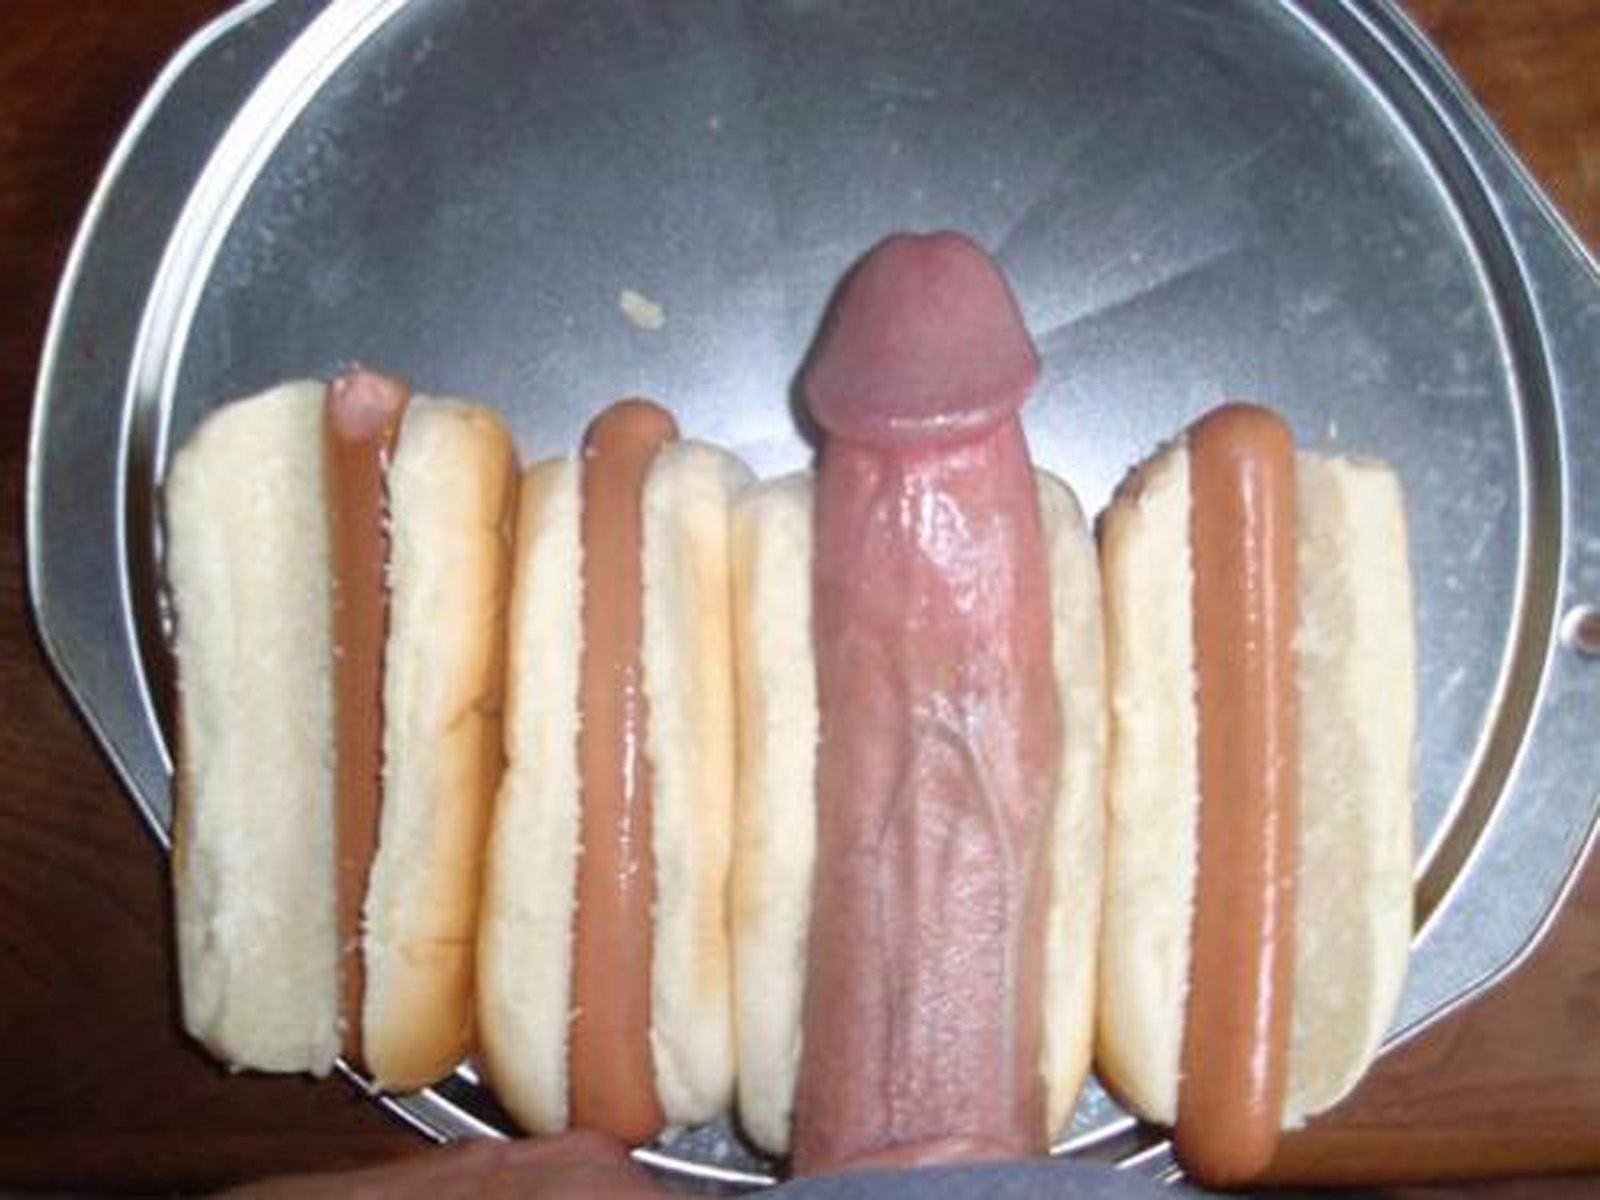 Dicks hot dog wilson